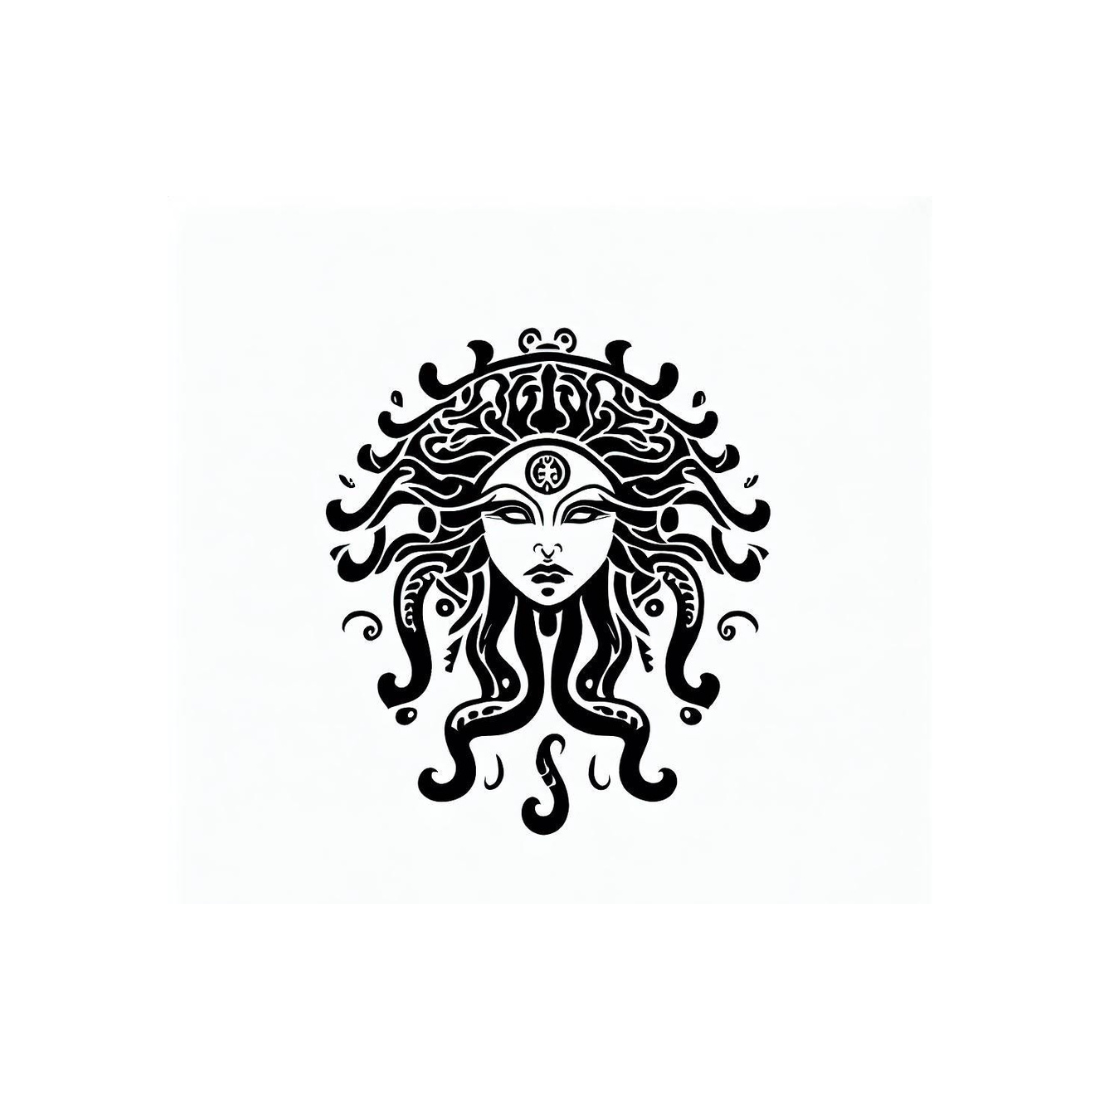 Medusa logo cover image.